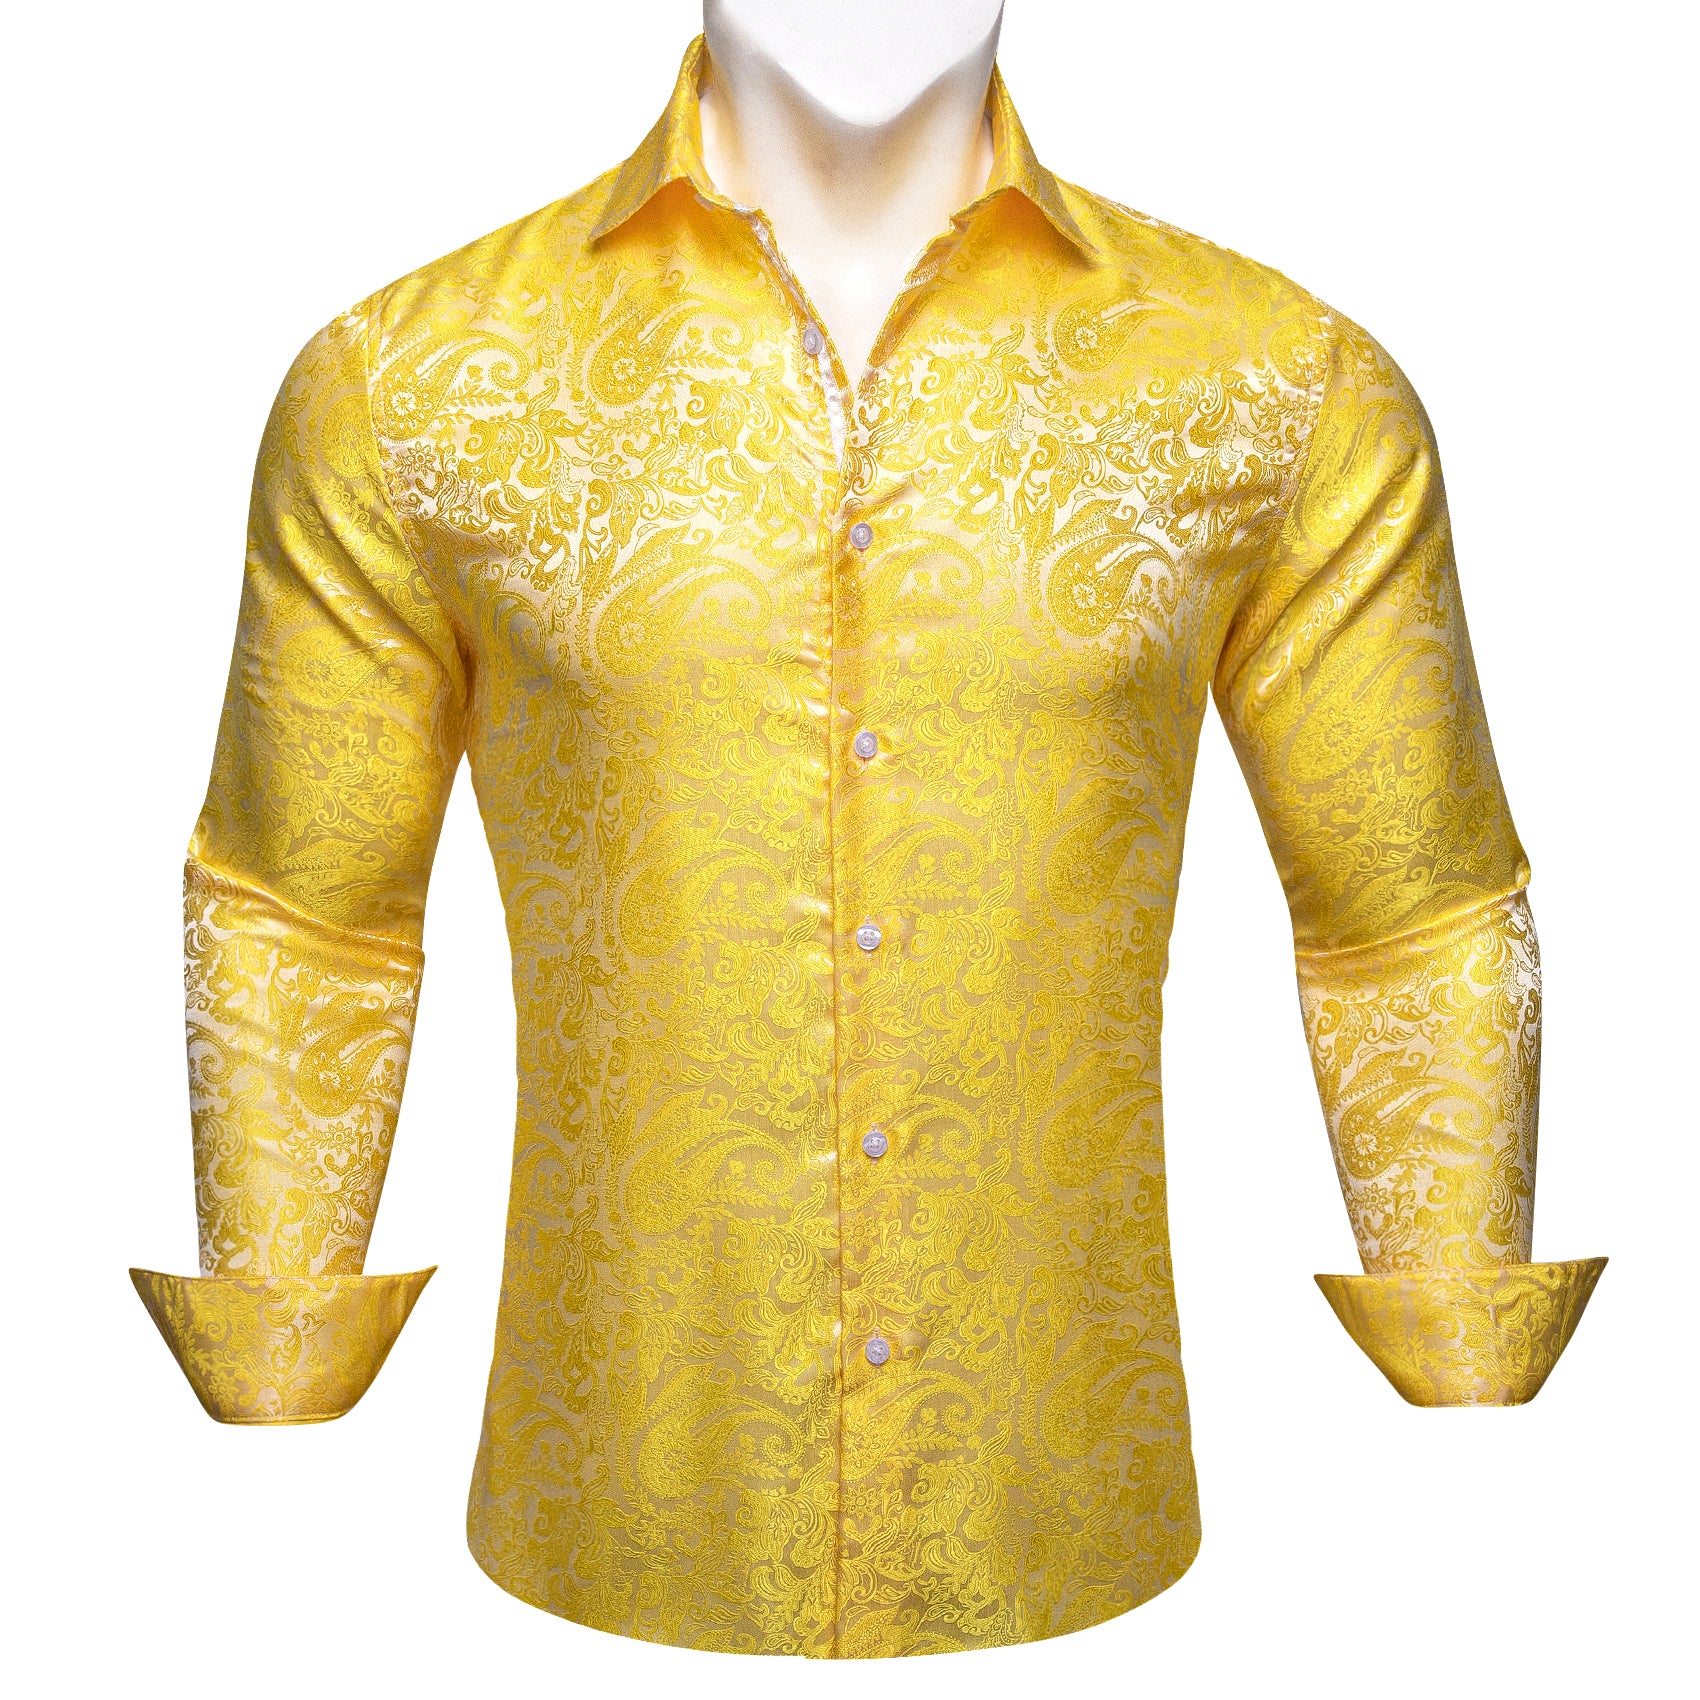 Barry.wang Yellow Paisley Silk Men's Shirt